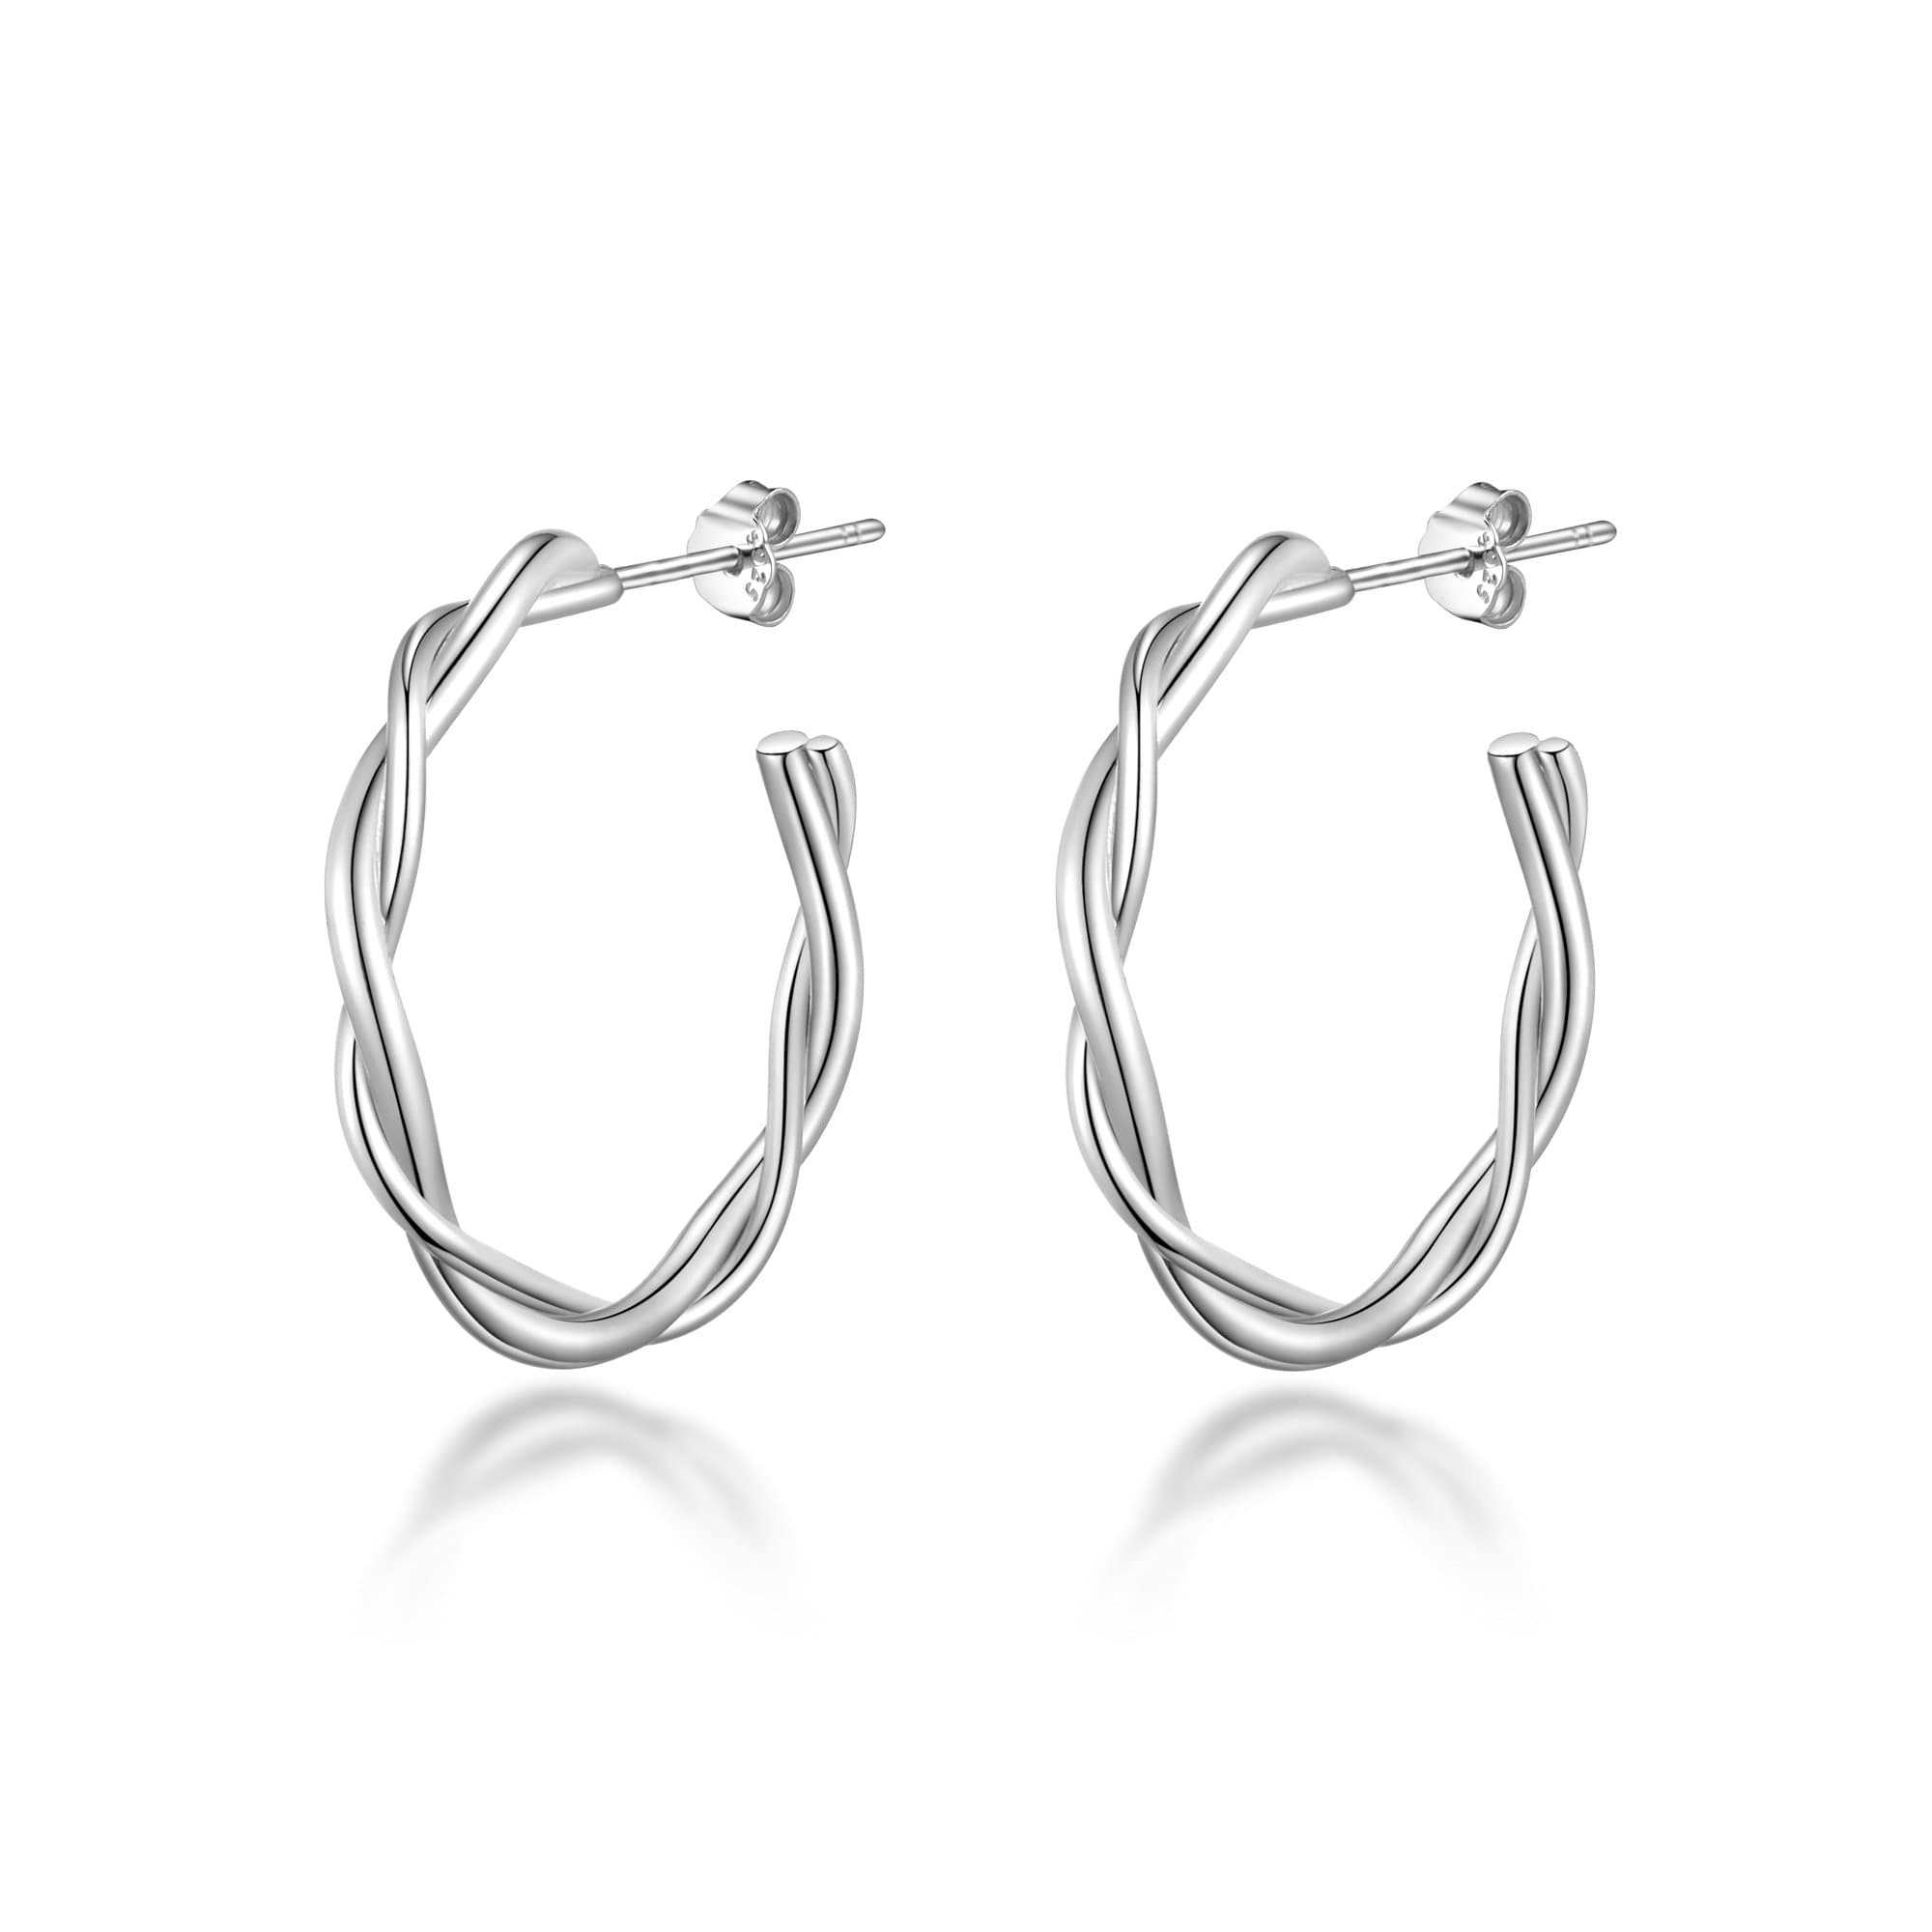 Sterling Silver Twisted Knot Hoop Earrings by Philip Jones Jewellery